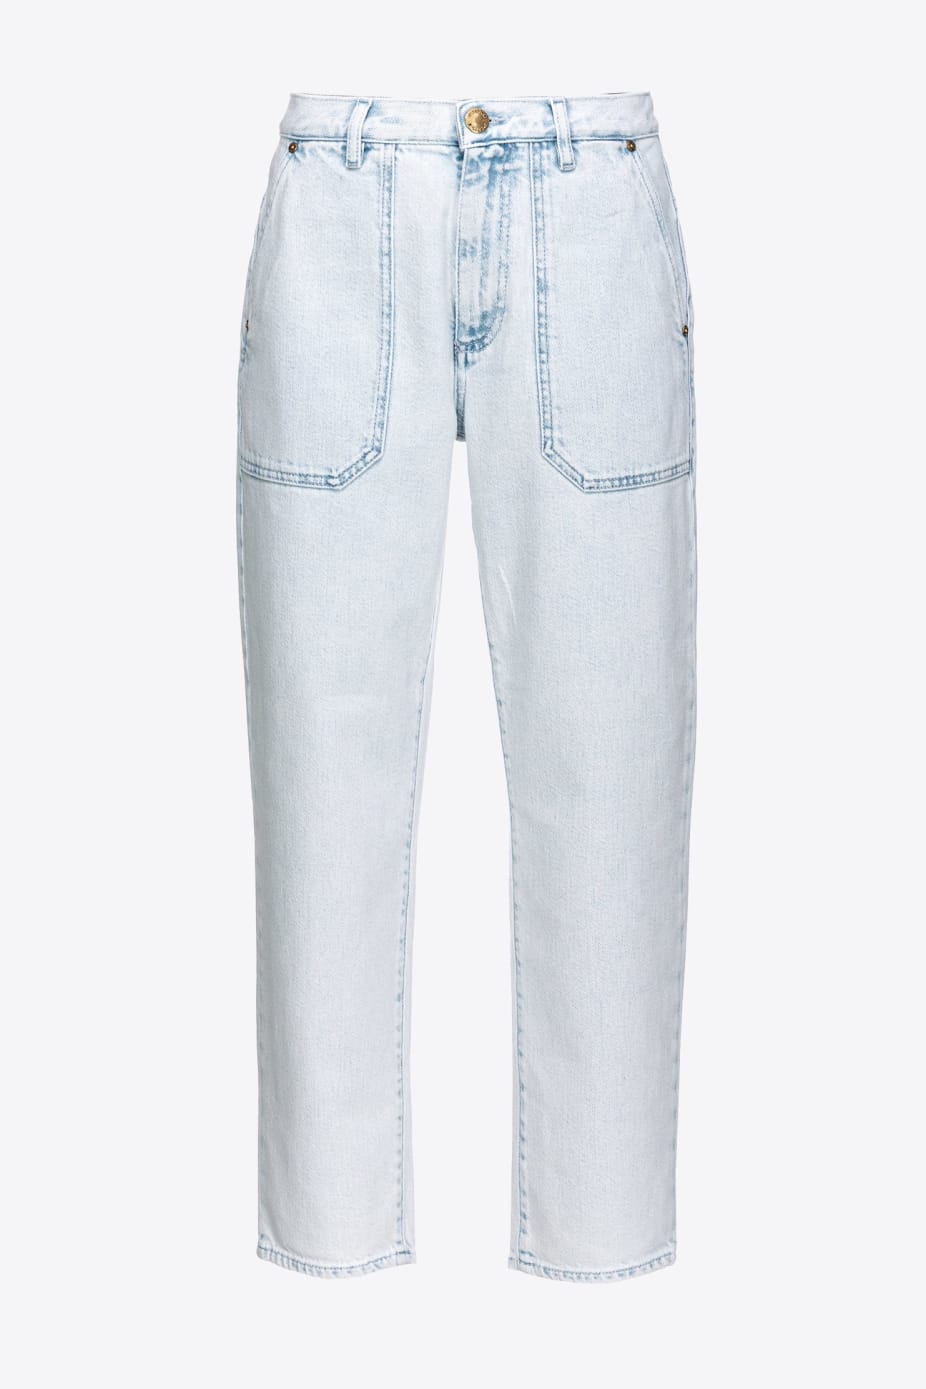 Jeans Chinos Chiari / Jeans - Ideal Moda